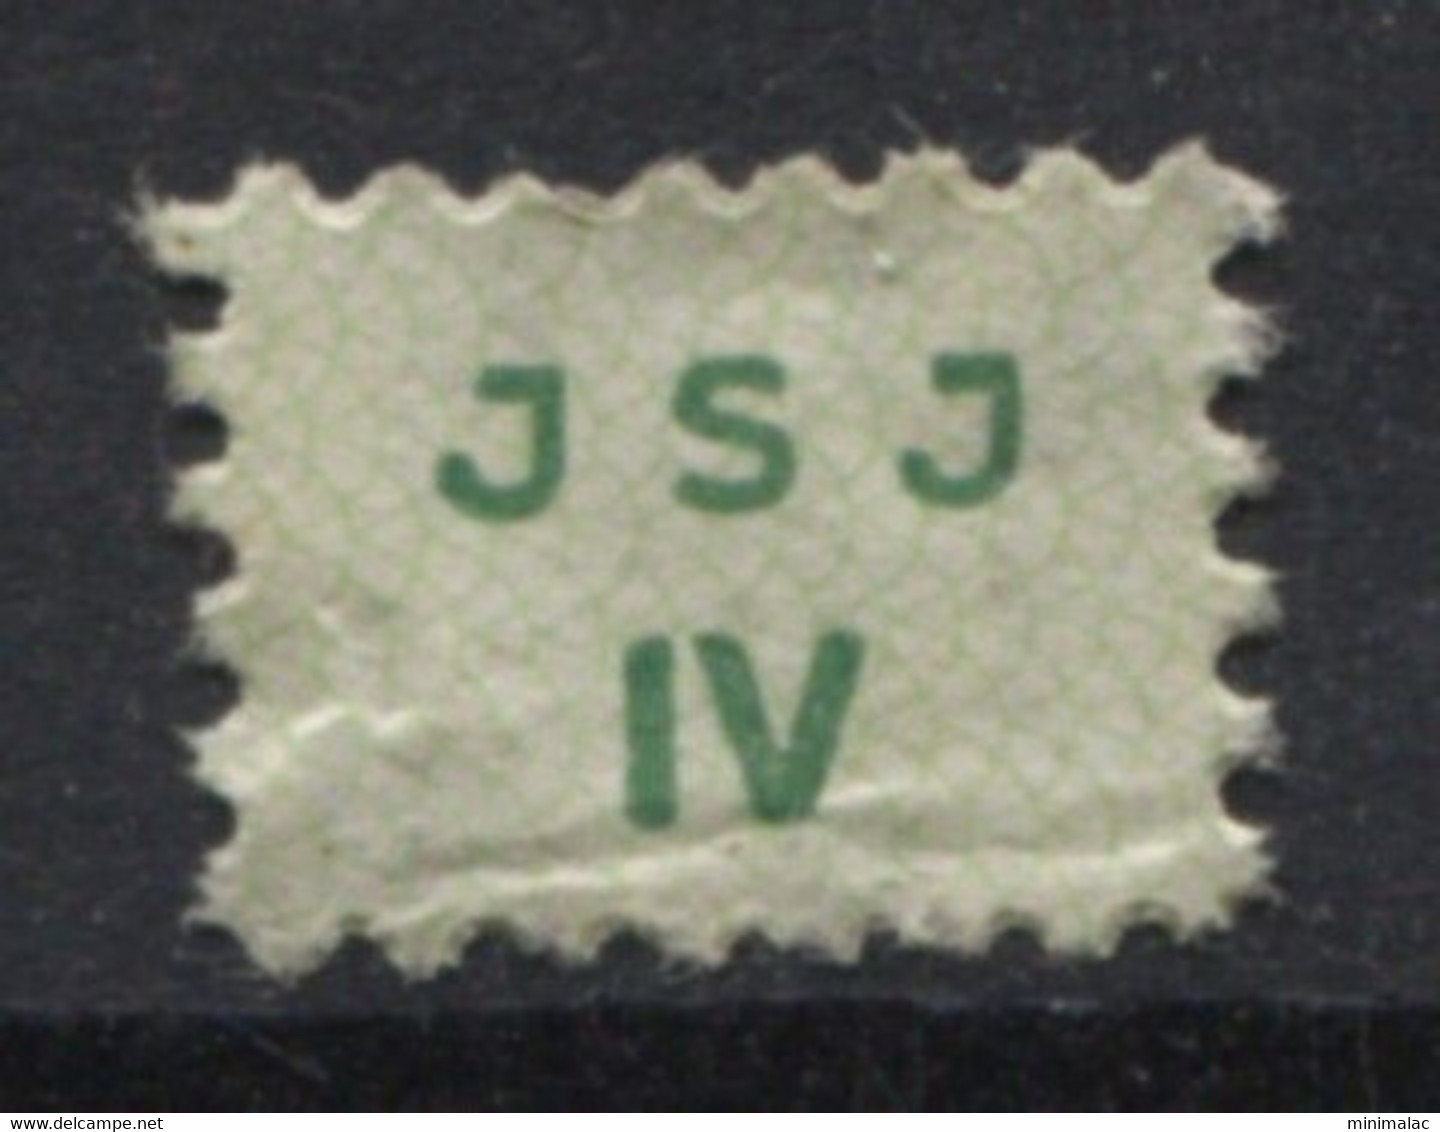 Yugoslavia 1948, Stamp For Membership, JSJ, Labor Union, Administrative Stamp - Revenue, Tax Stamp, IV - Service